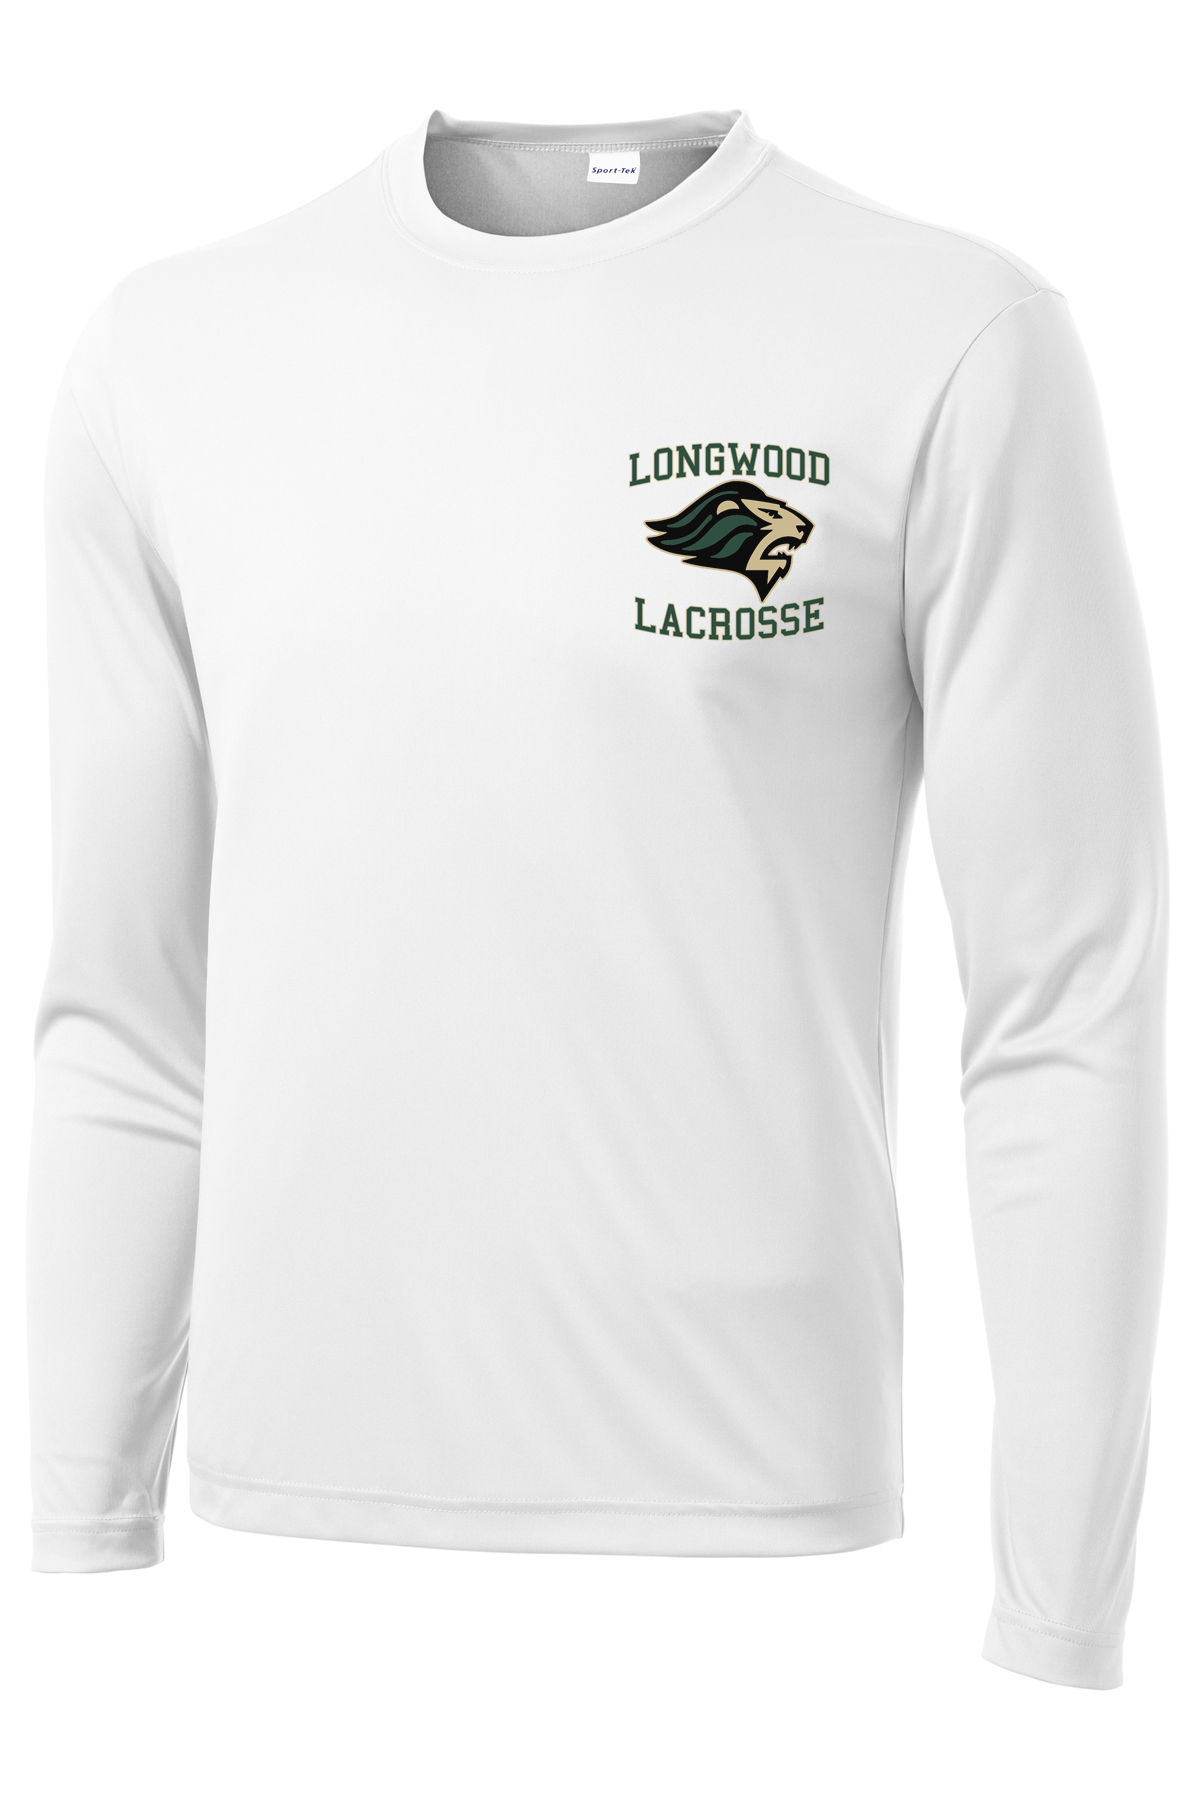 Longwood Lacrosse White Long Sleeve Performance Shirt